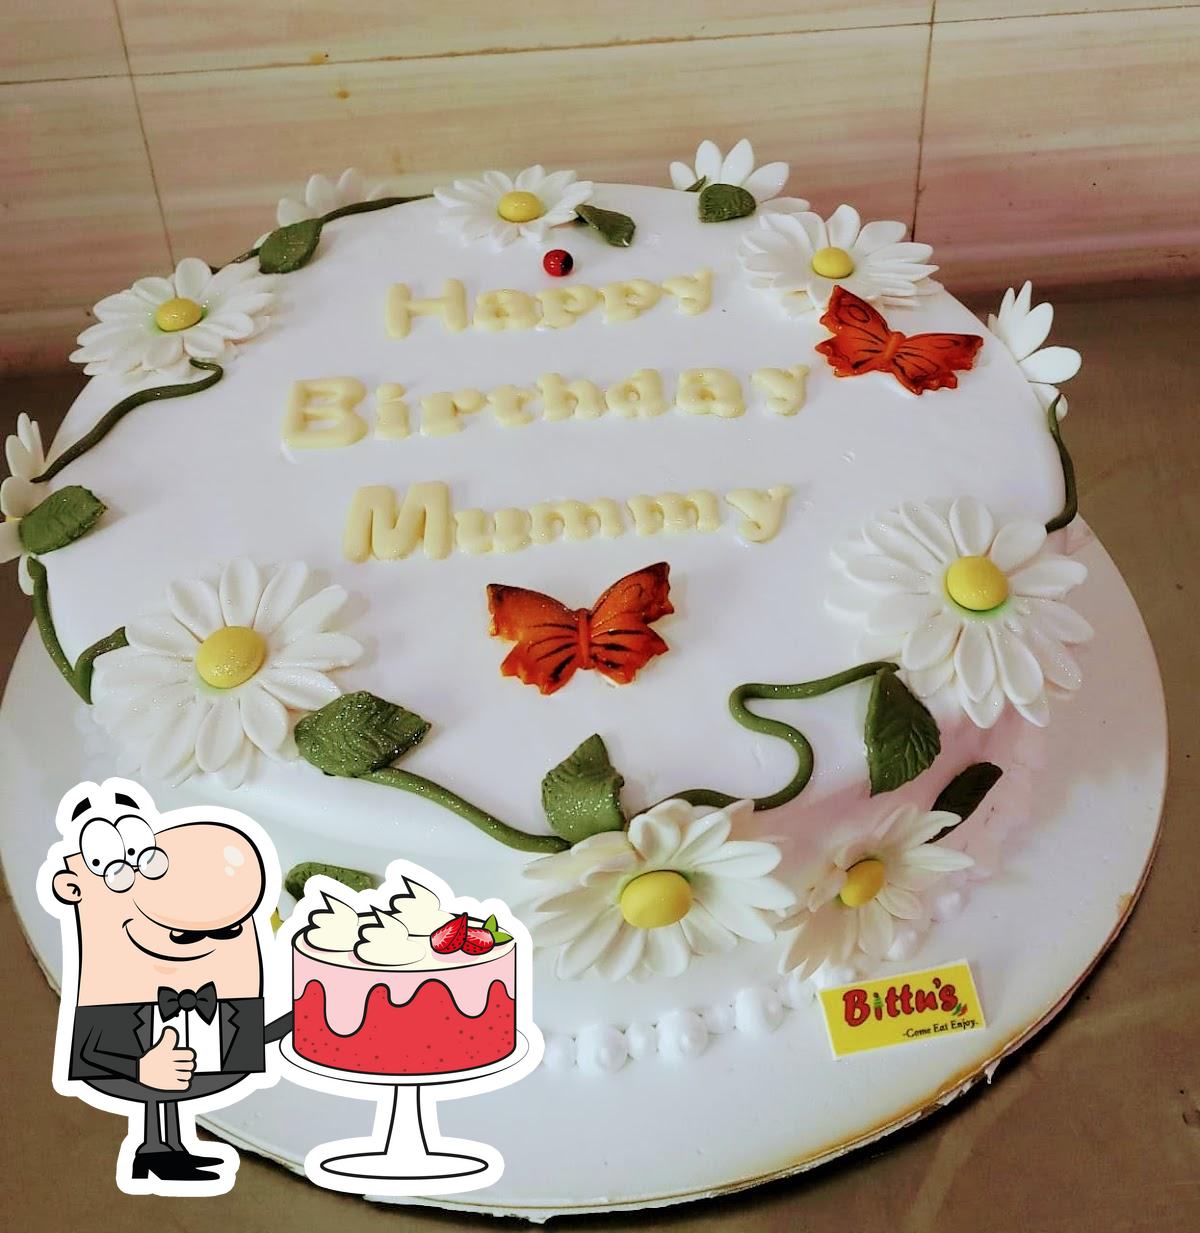 Manoj bakery - #Happy Birthday 🎂Bittu 🍰 #vijayawada #vijayawadafoodies  #cakelovers | Facebook